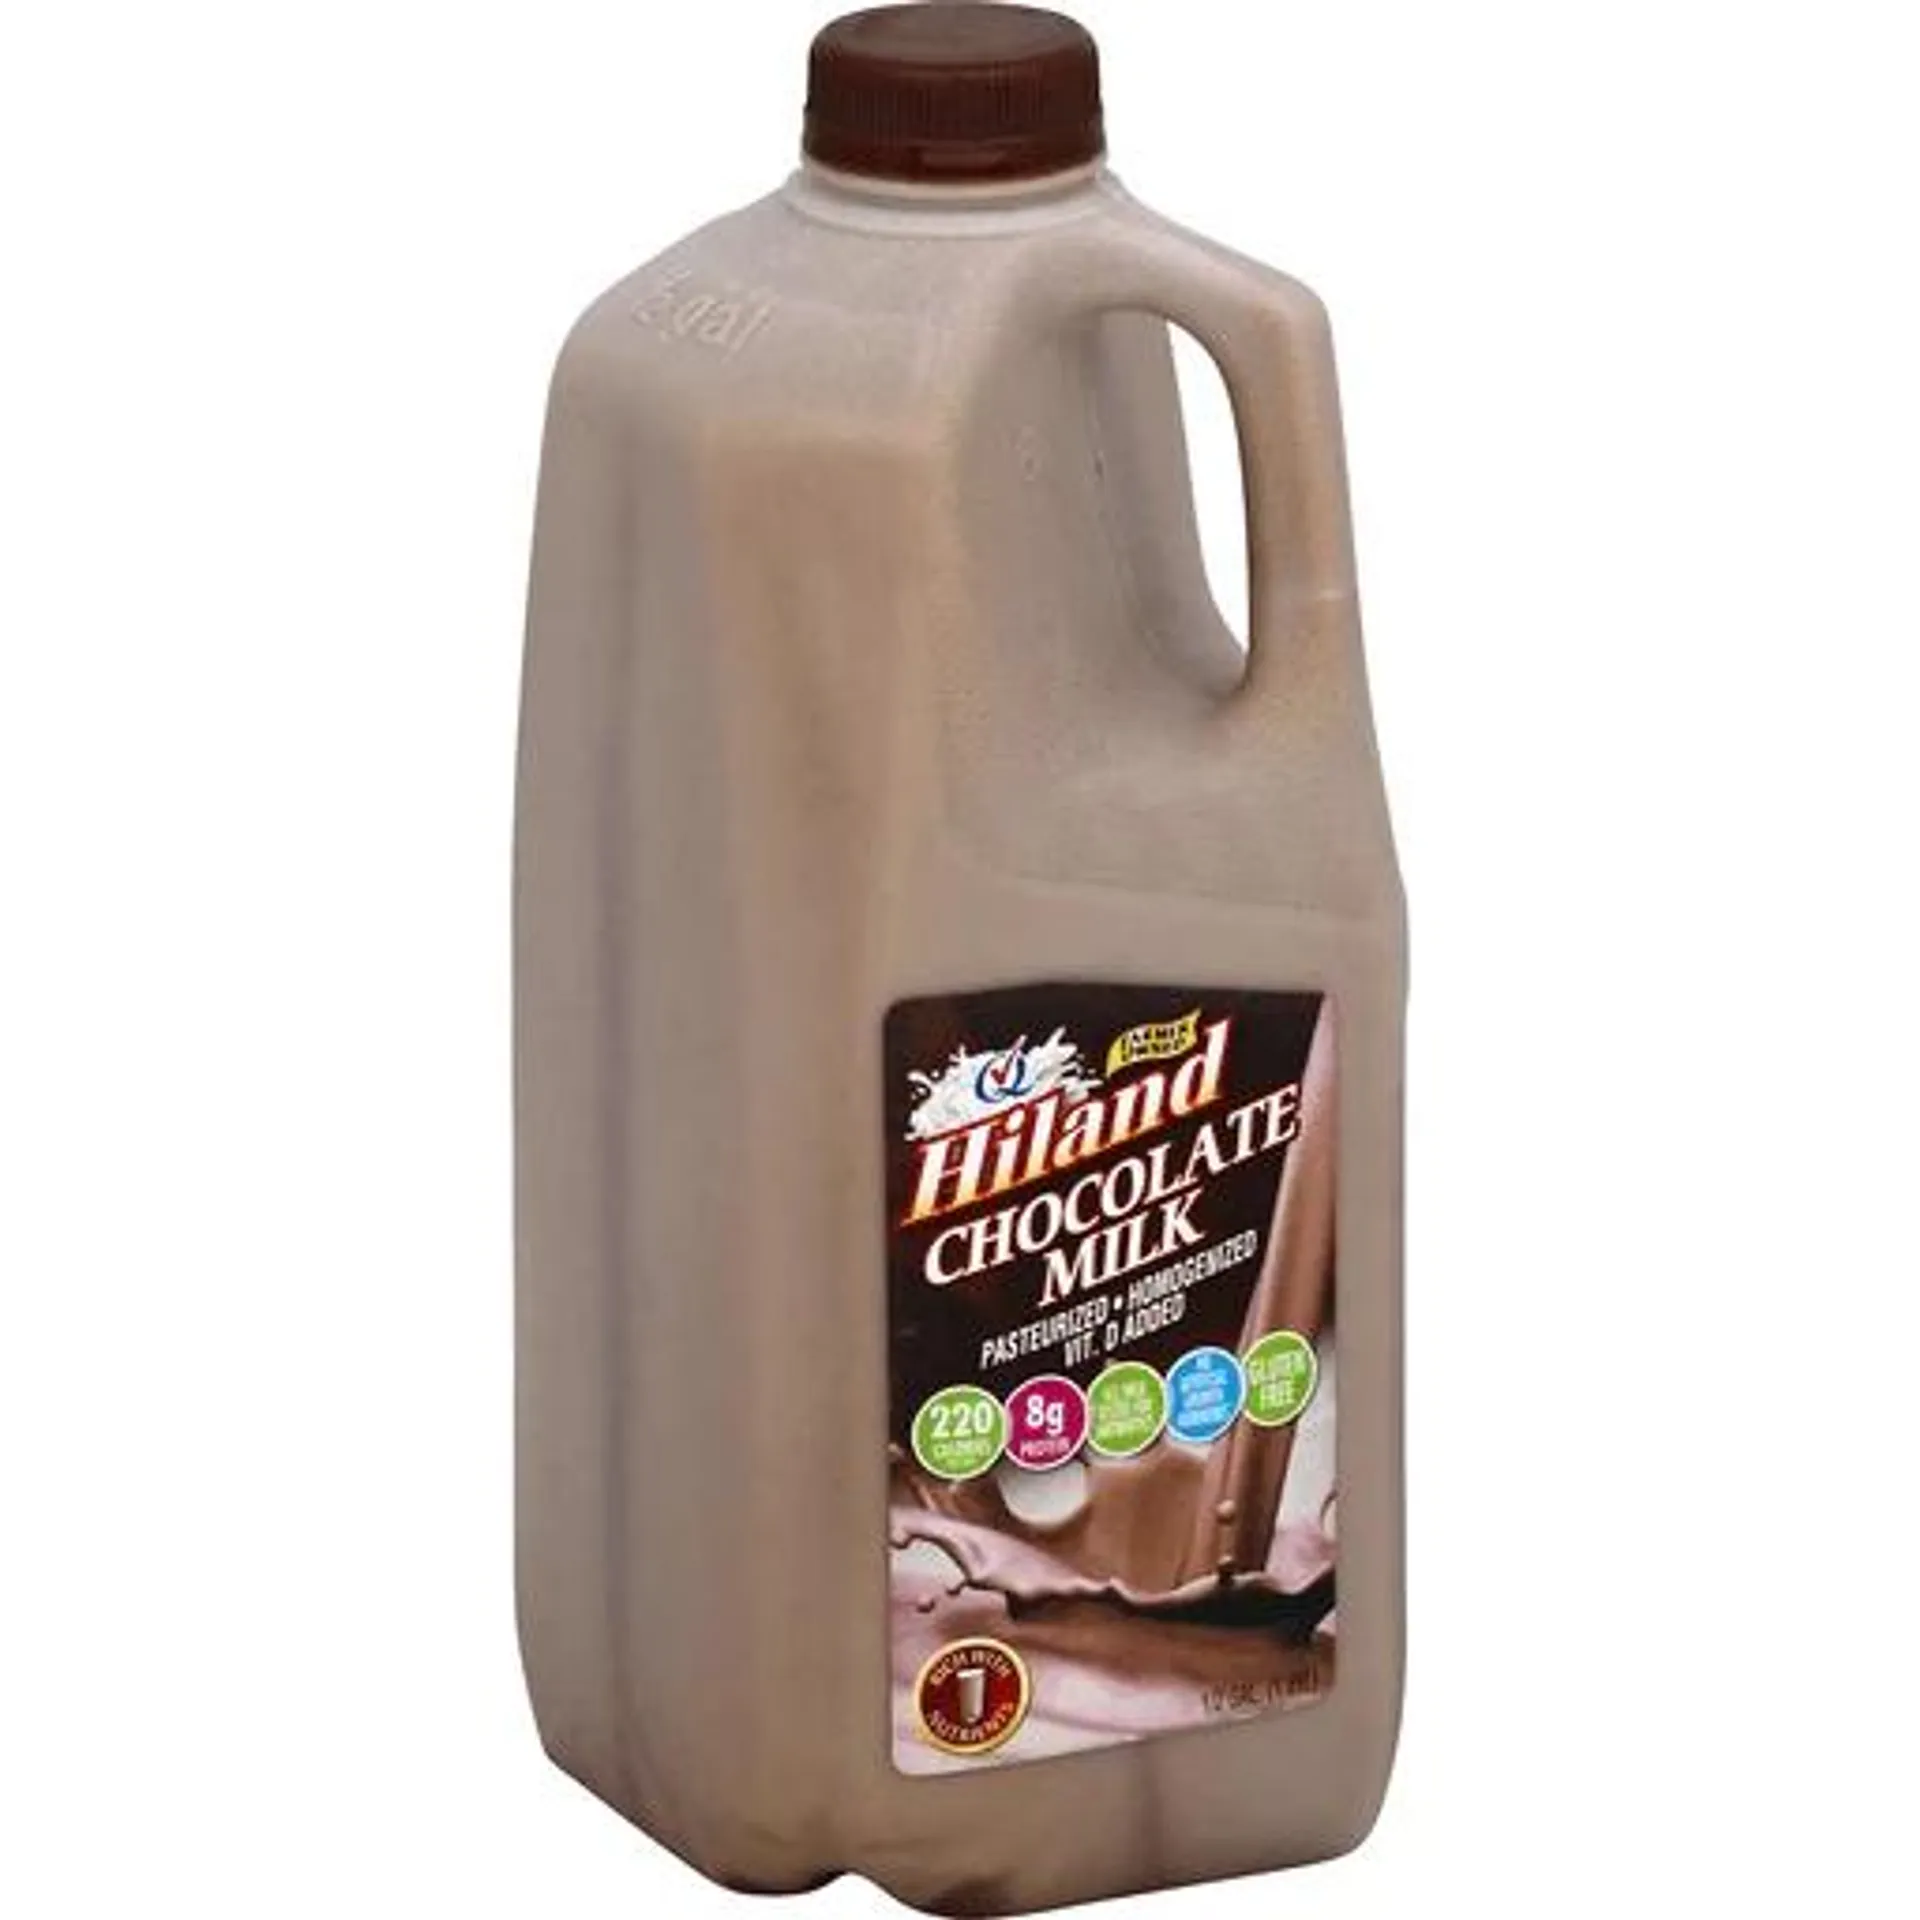 Hiland Chocolate Milk